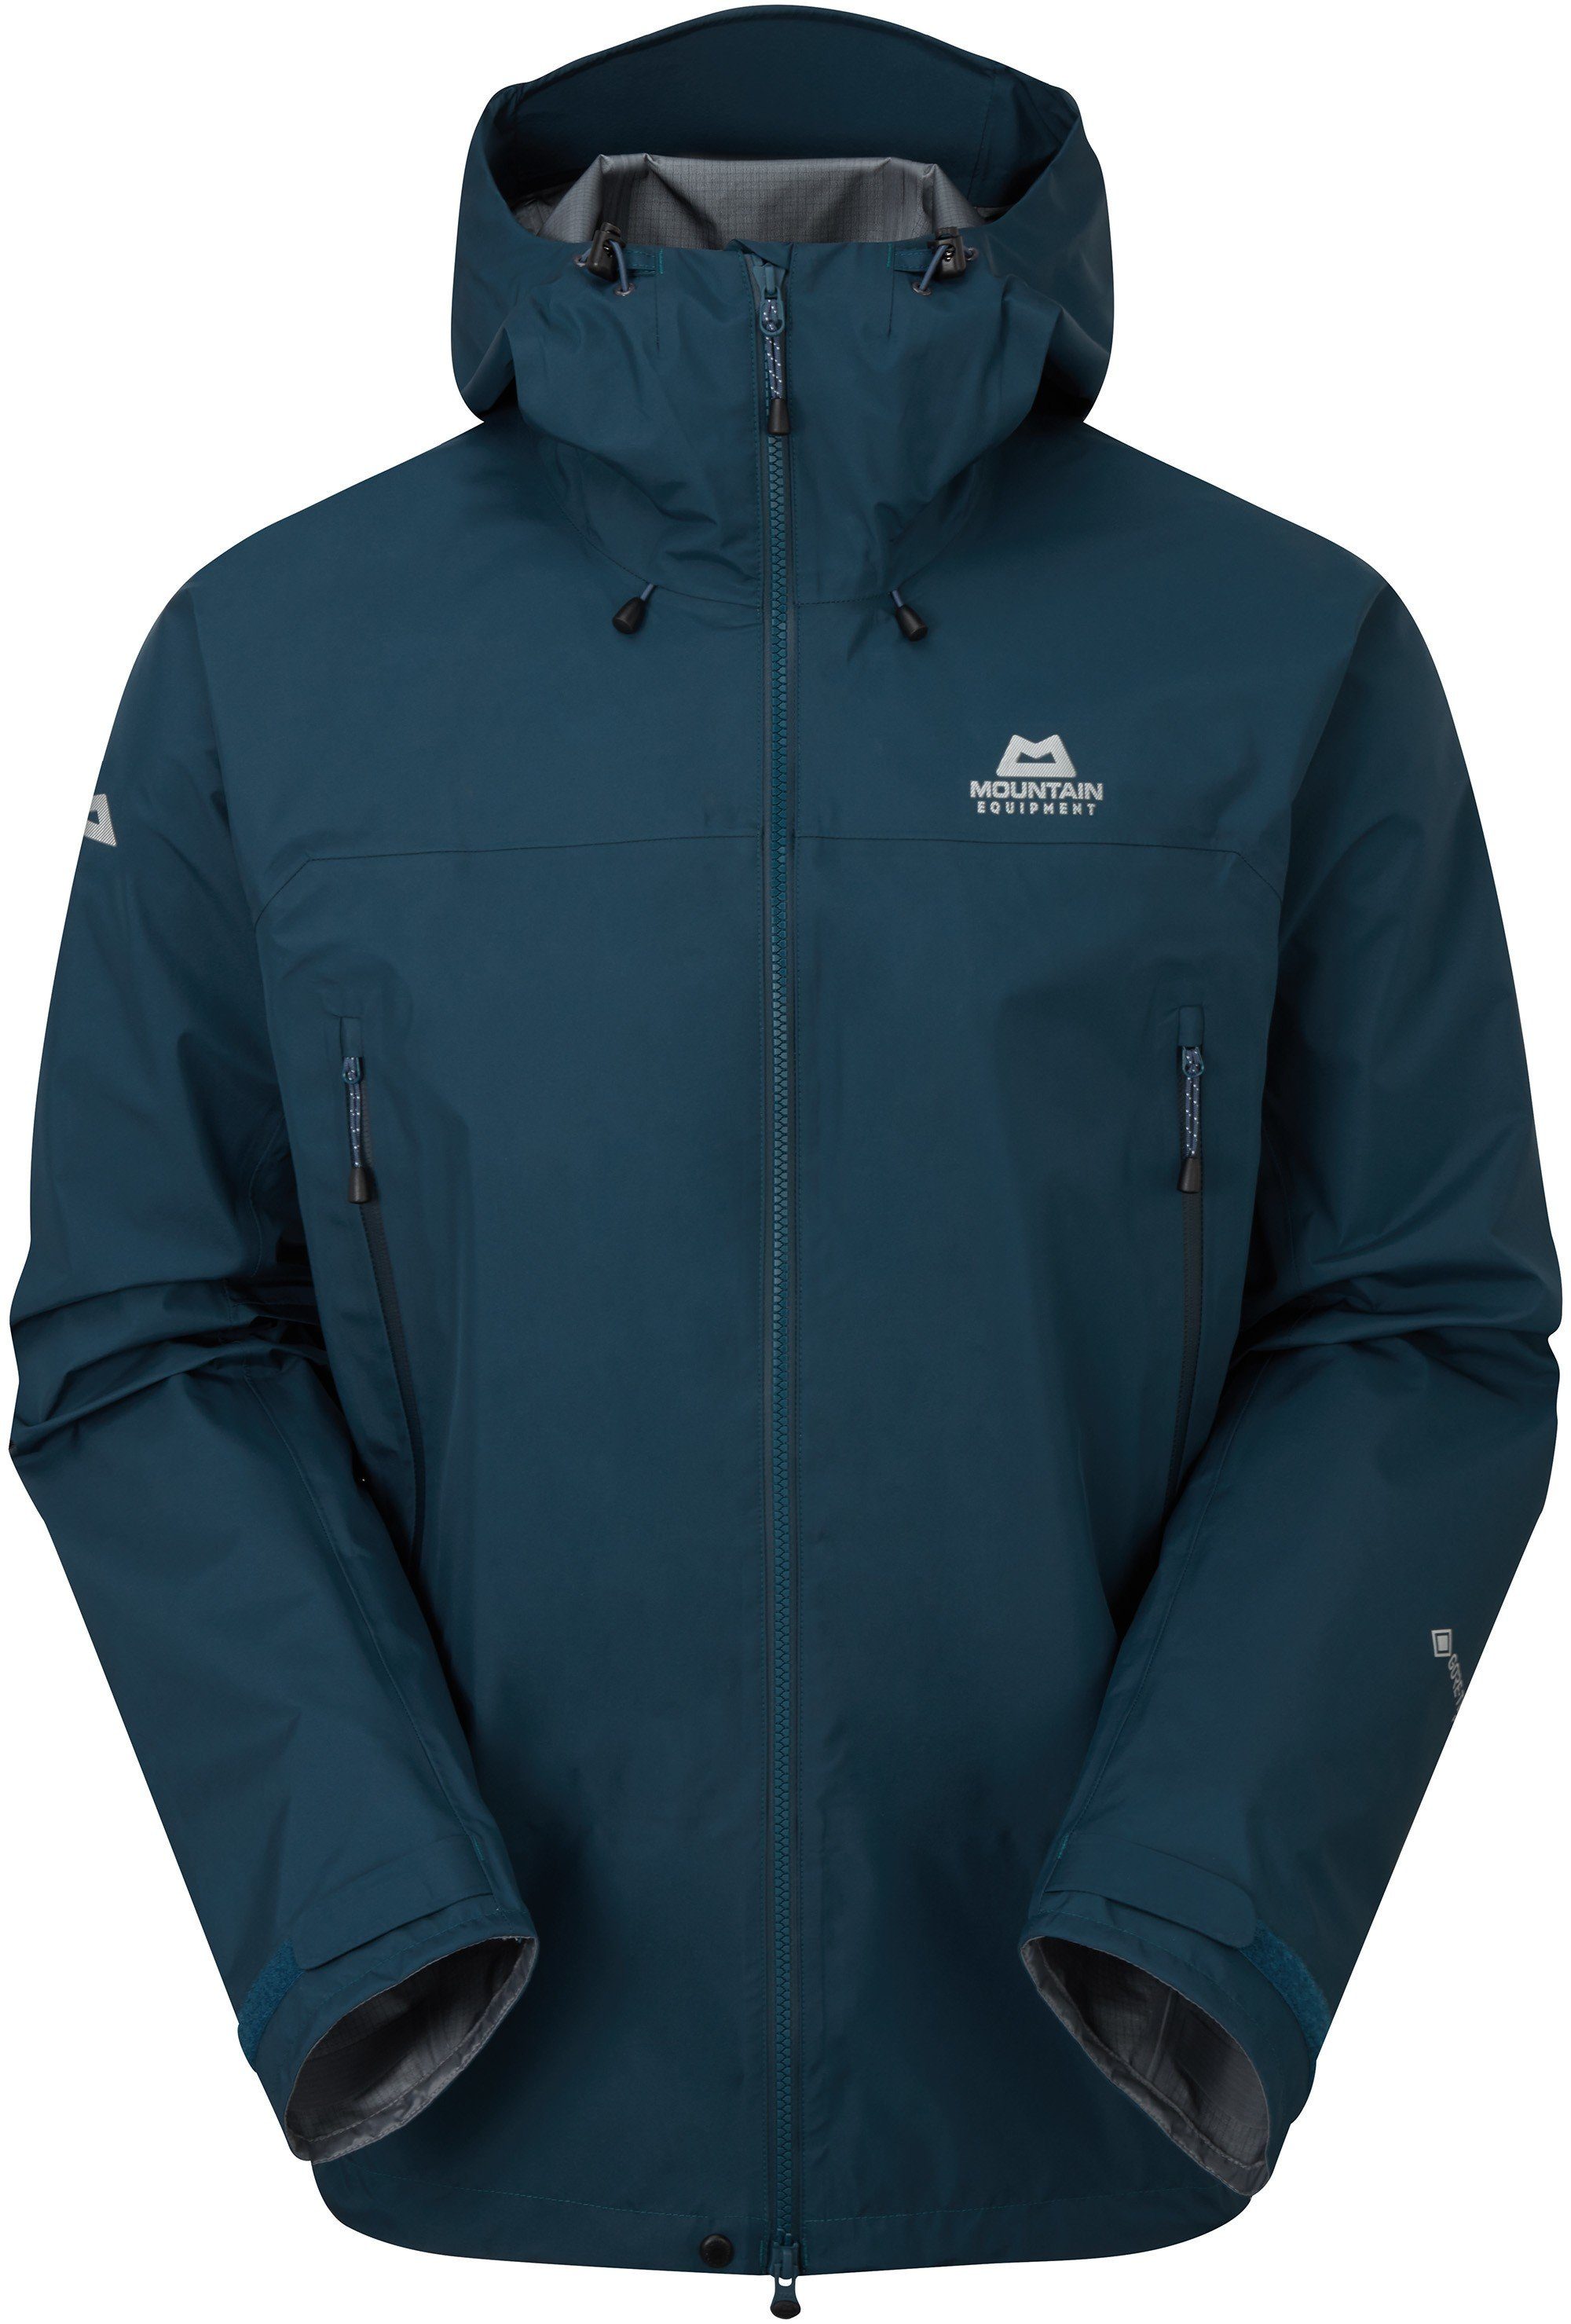 Mountain Equipment Outdoorjacke Shivling Jacket majolica blue | Jacken